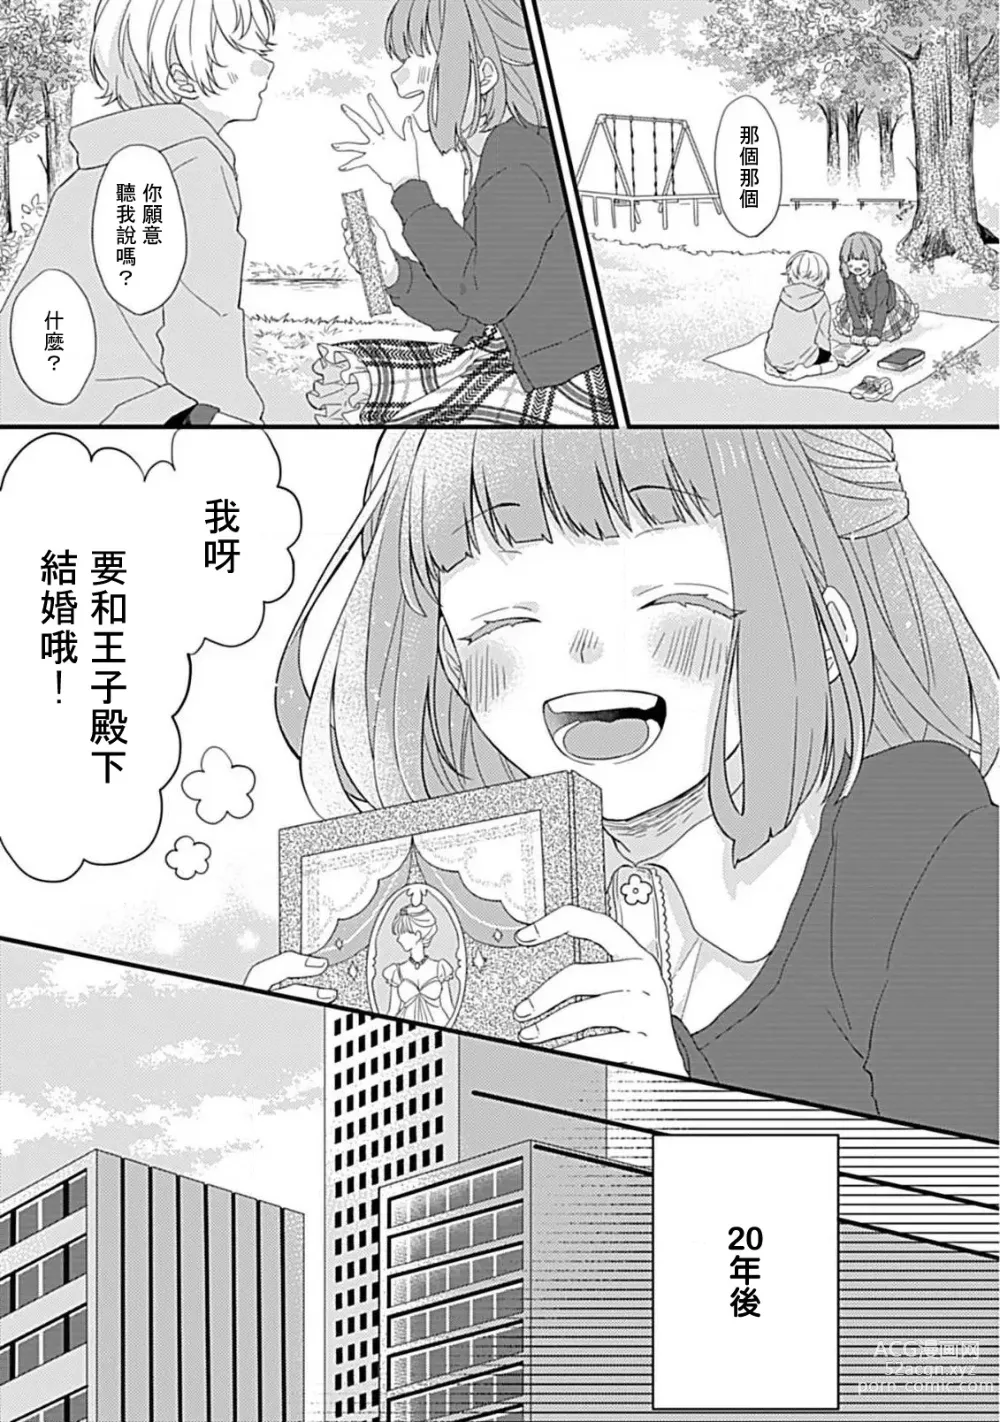 Page 2 of manga 辛德瑞拉综合征与溺爱王子